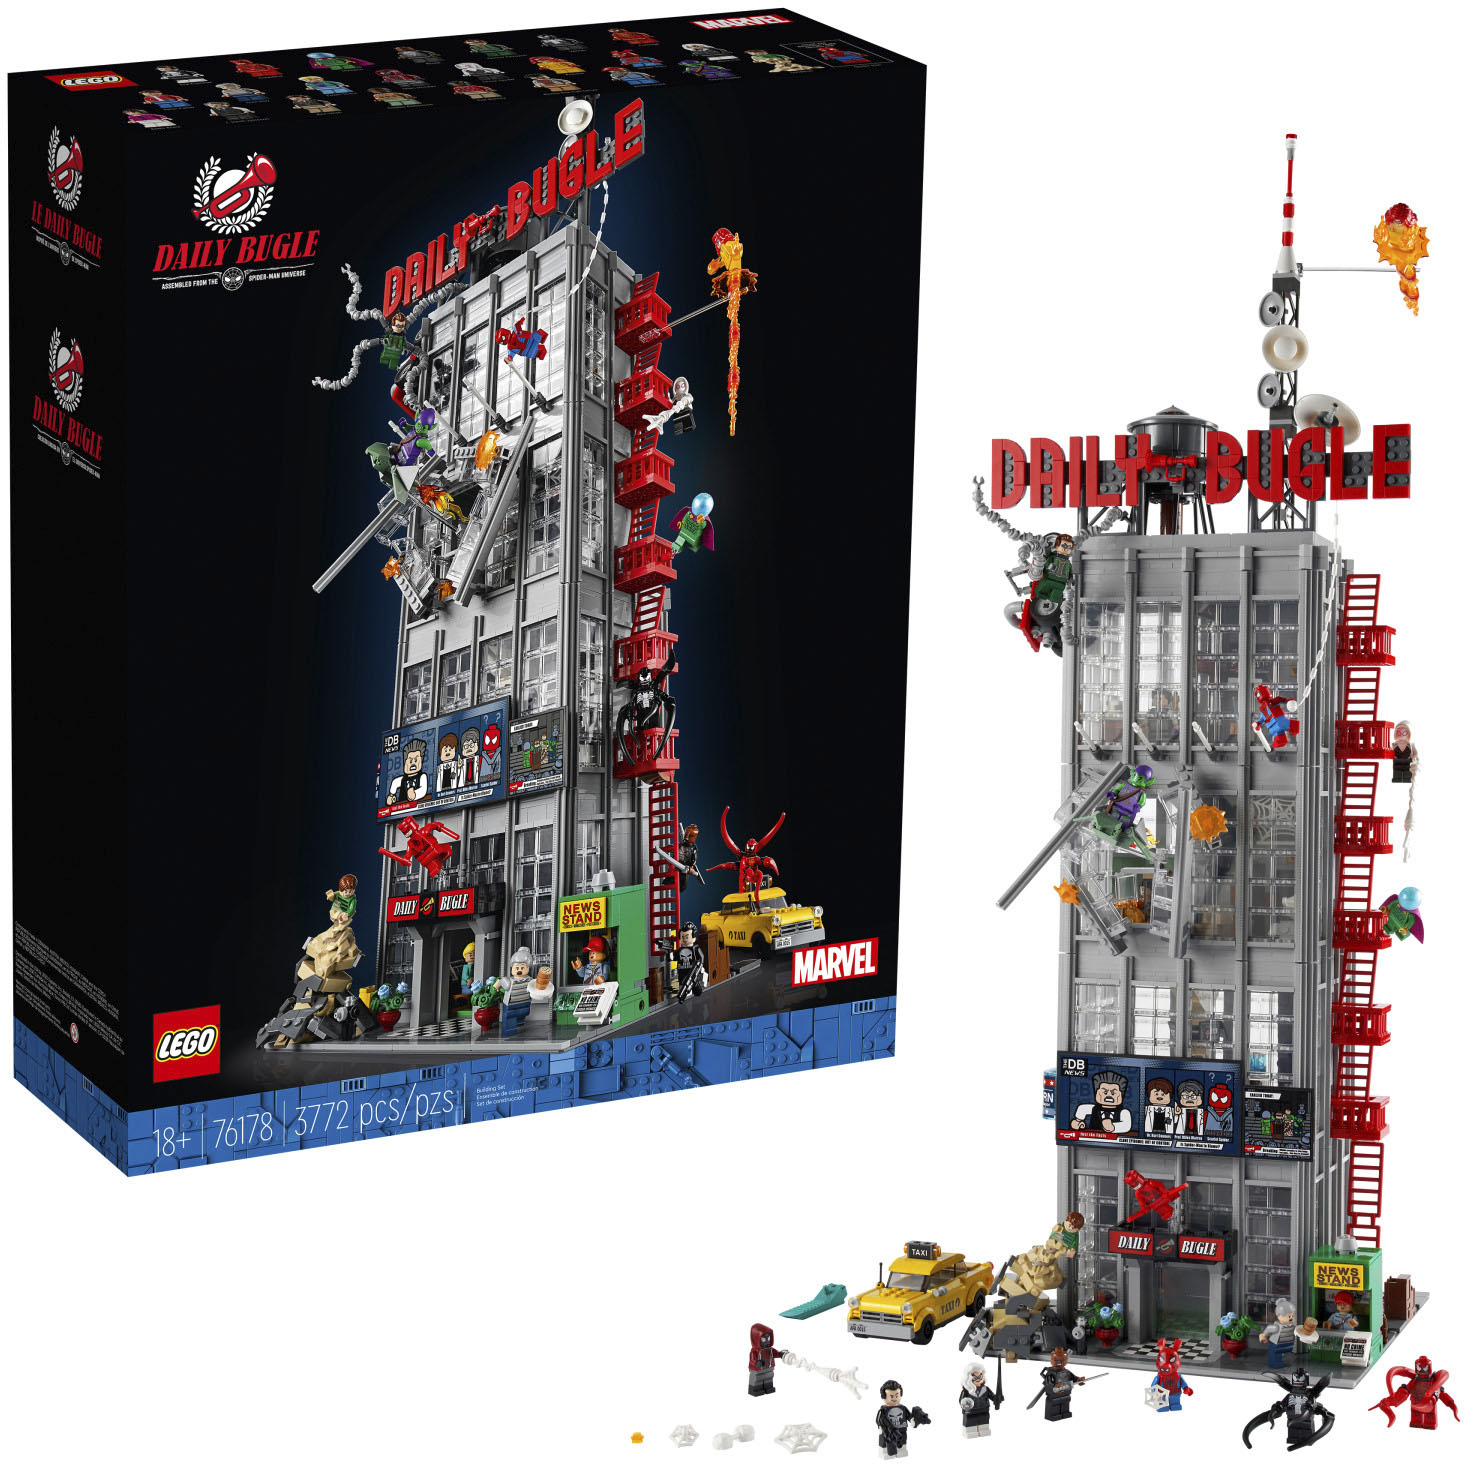 Schildknaap Herhaald parfum LEGO Marvel Spider-Man Daily Bugle 76178 Building Kit (3,772 Pieces)  6332627 - Best Buy